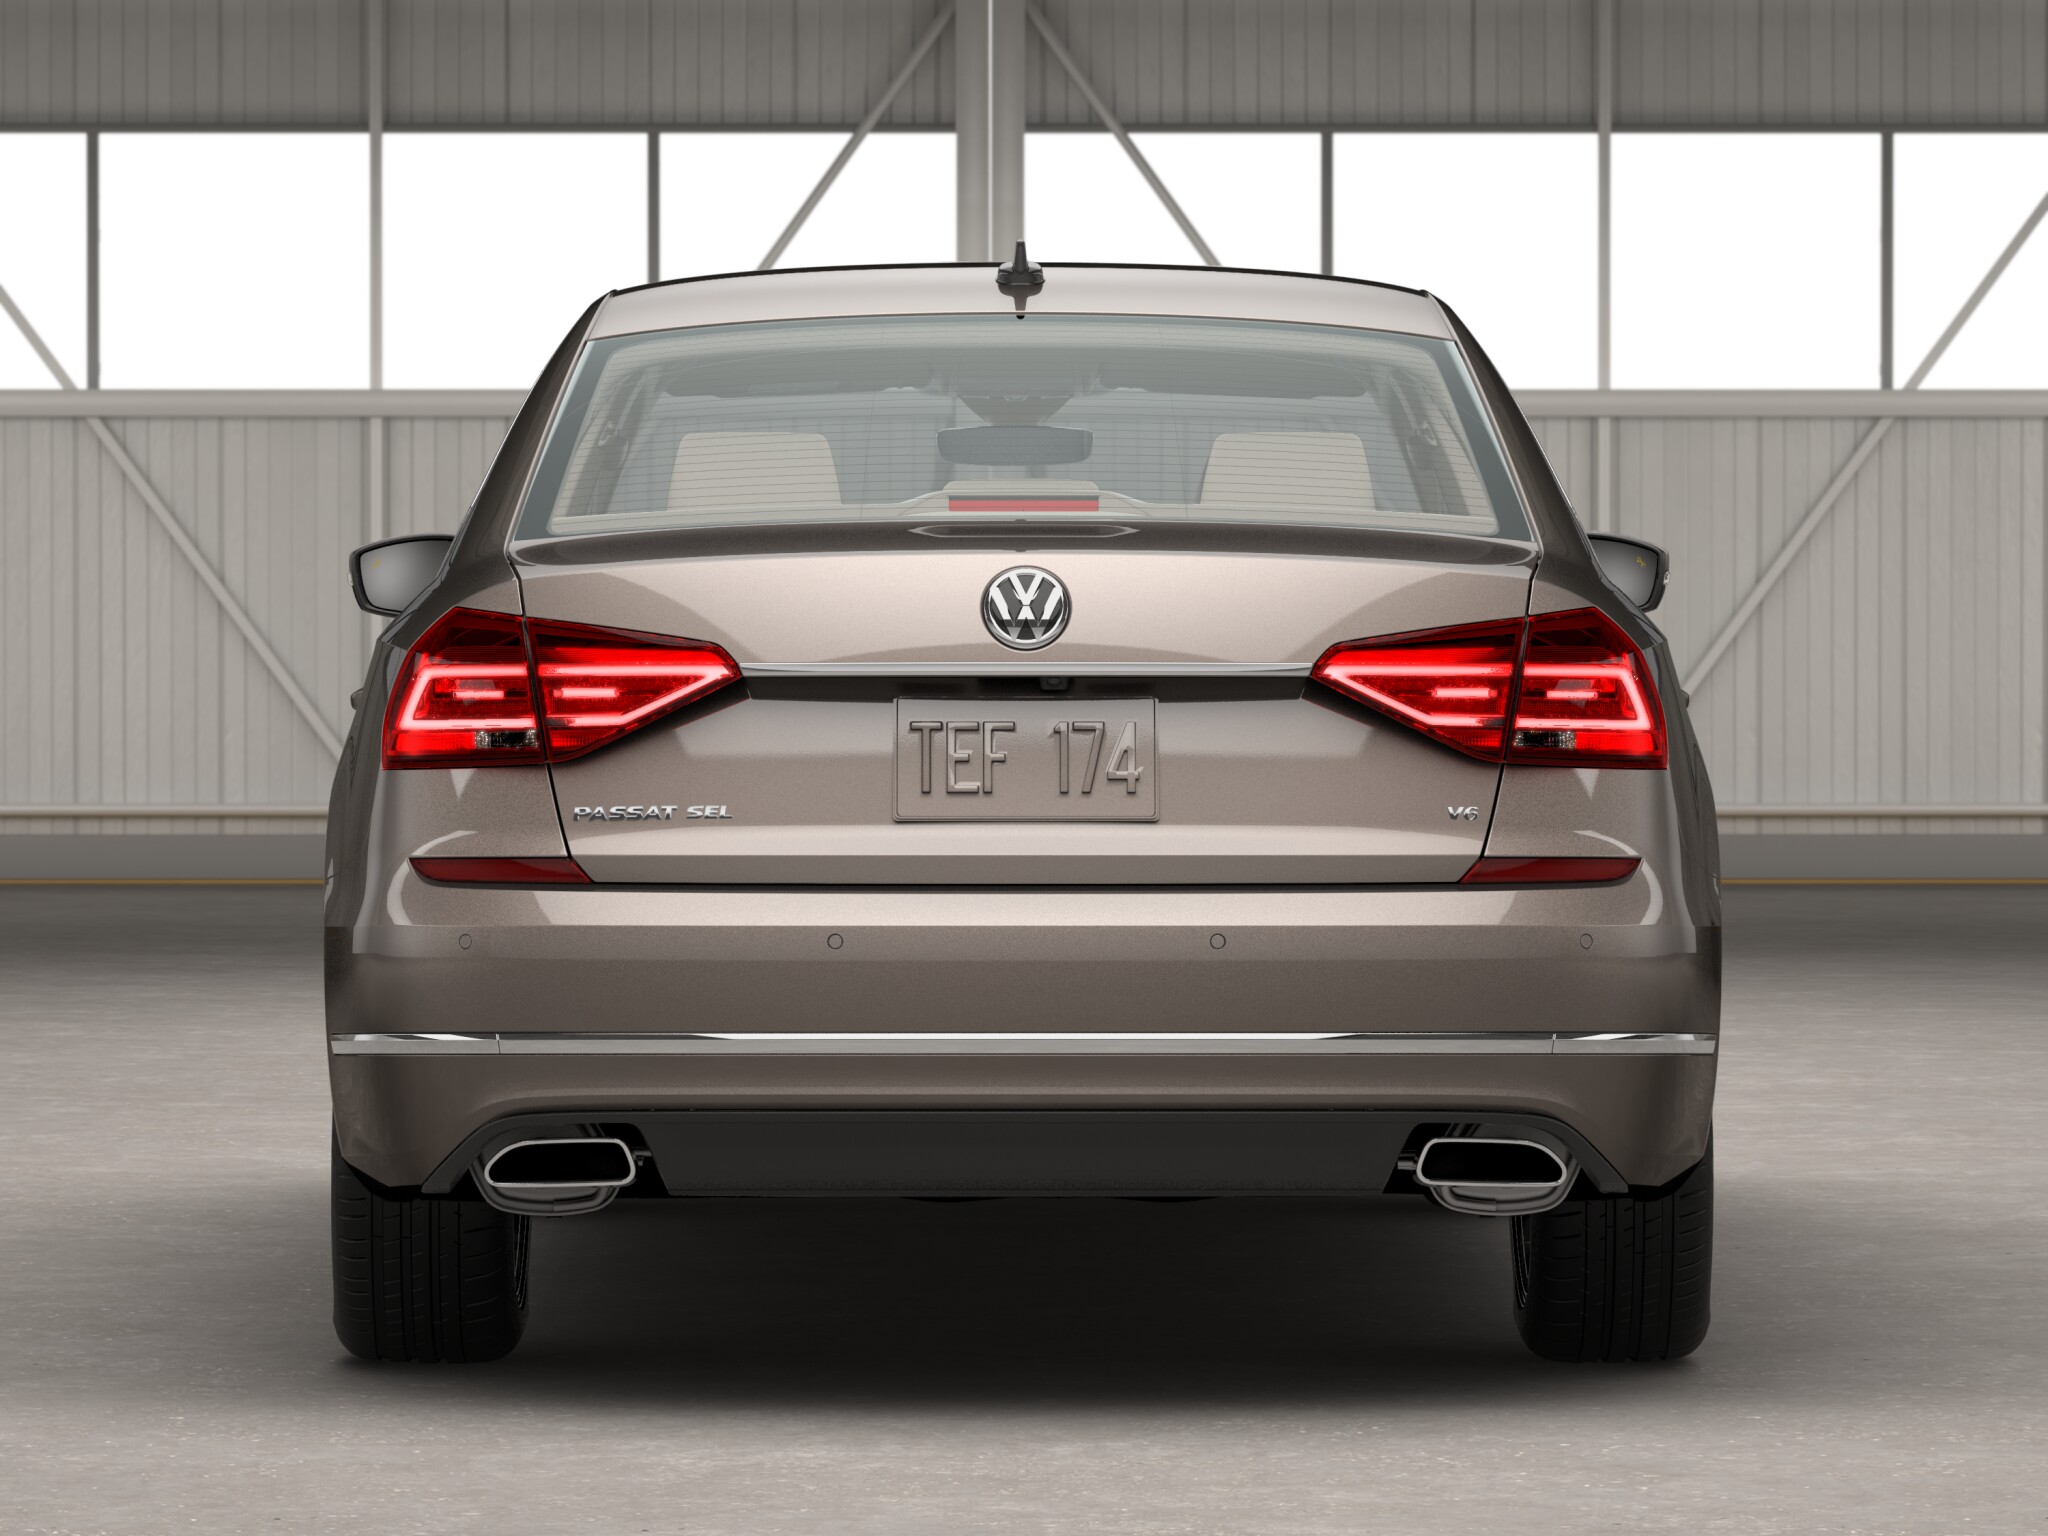 Volkswagen Passat V6 SEL Premium rear view